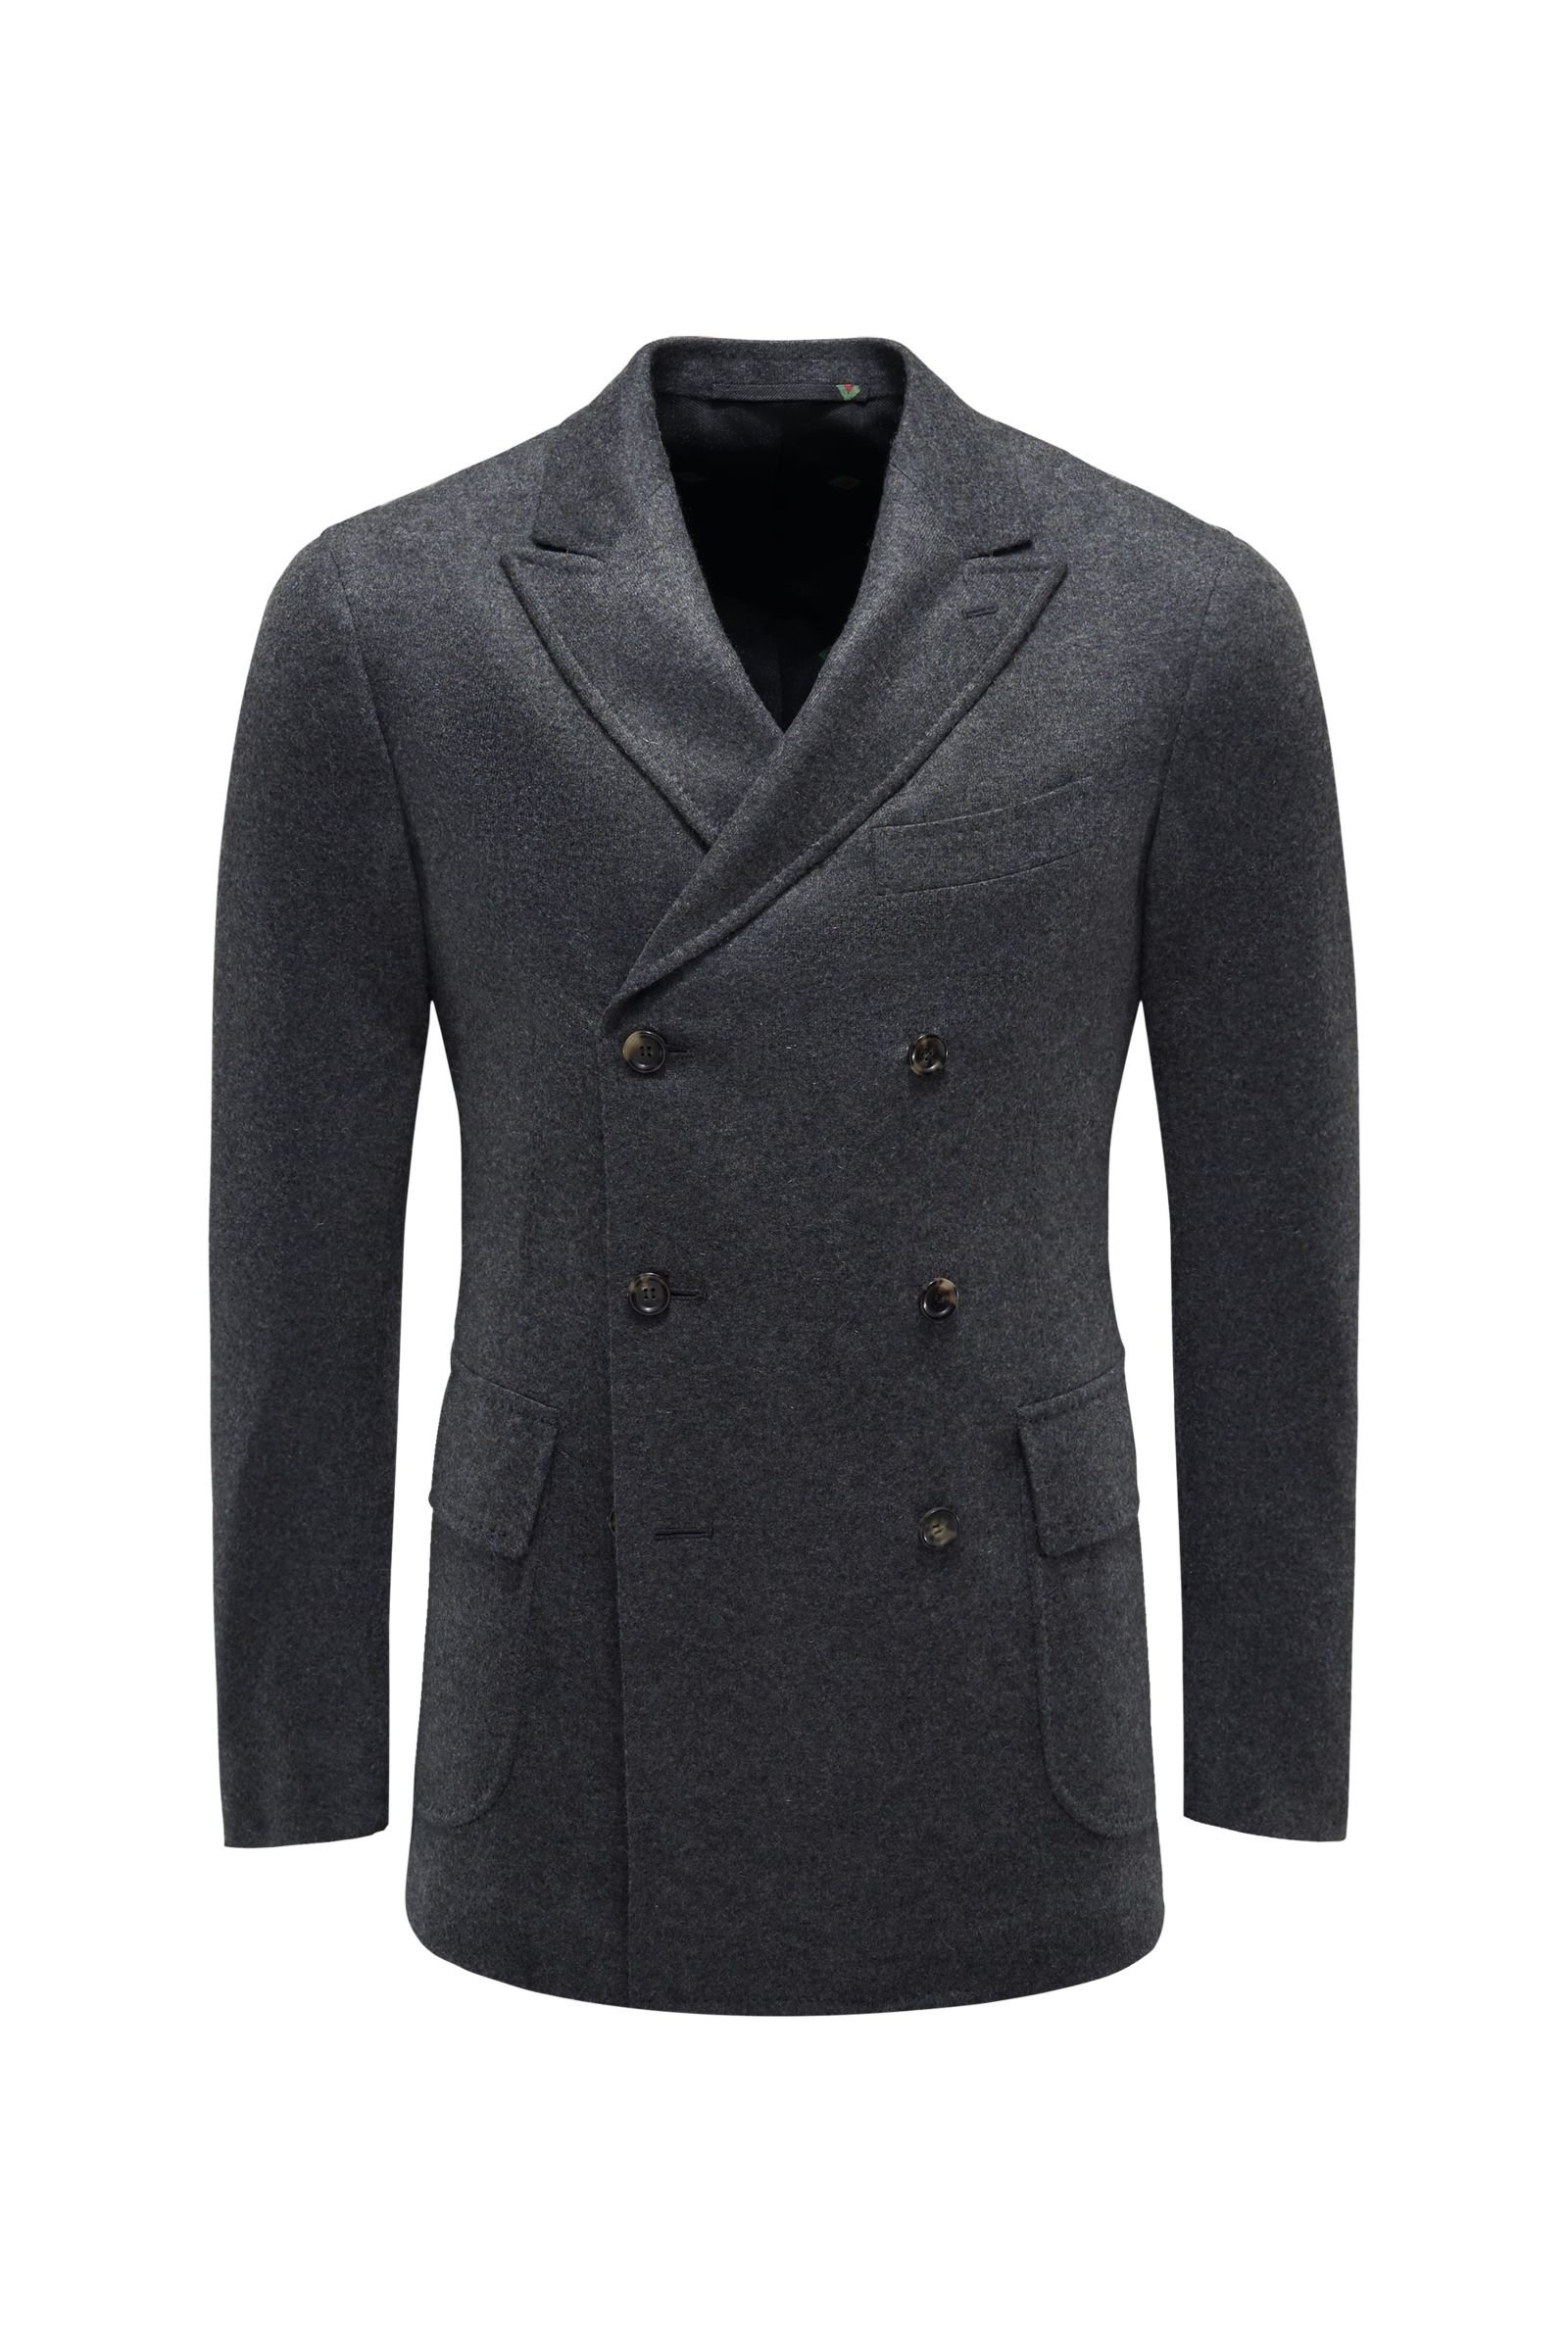 Cashmere smart-casual jacket 'Flavio' dark grey